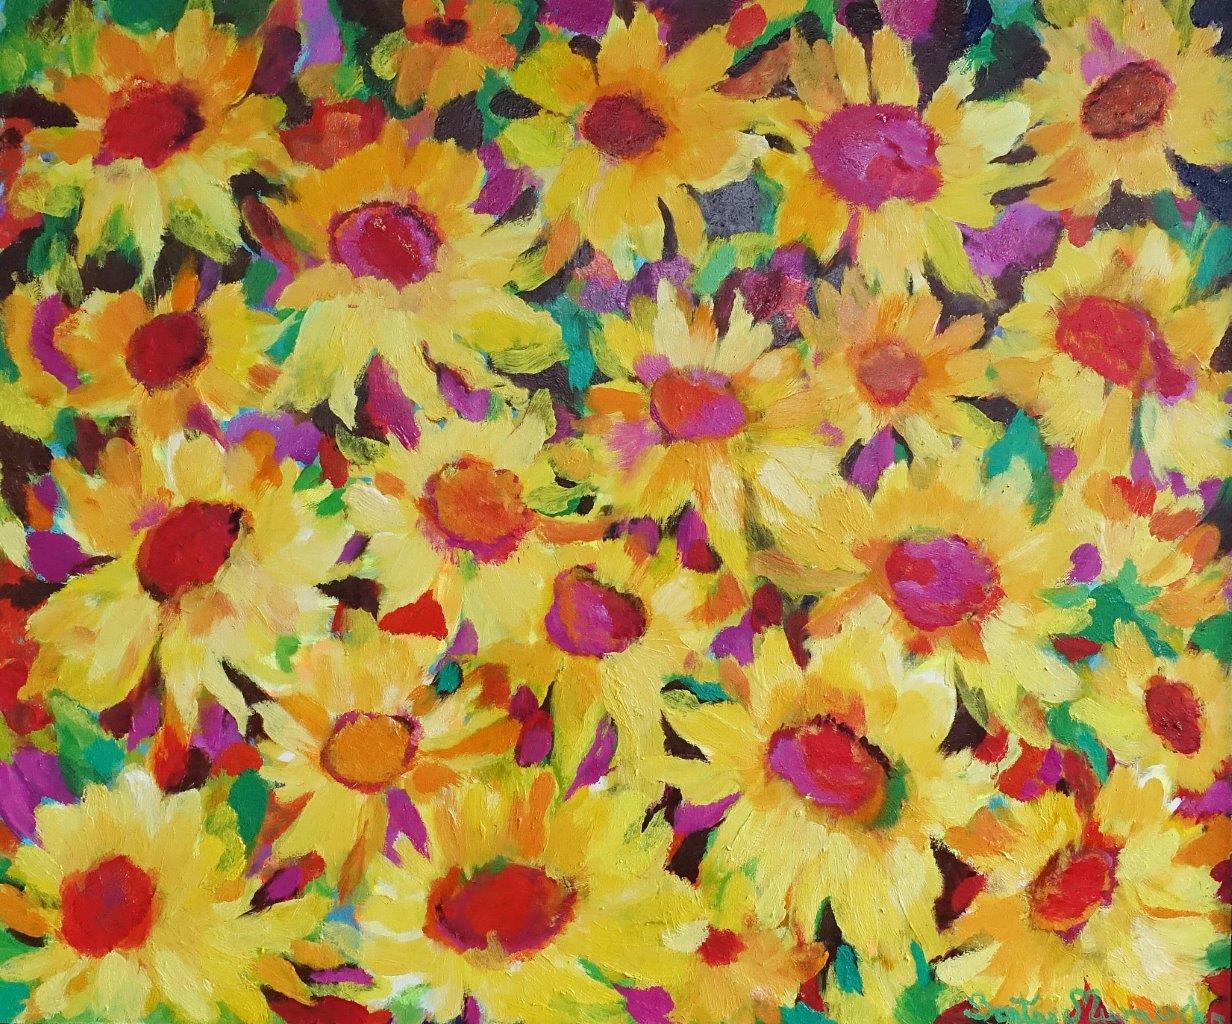 Beata Murawska - Fall night sunflowers (Oil on Canvas | Size: 126 x 106 cm | Price: 7000 PLN)